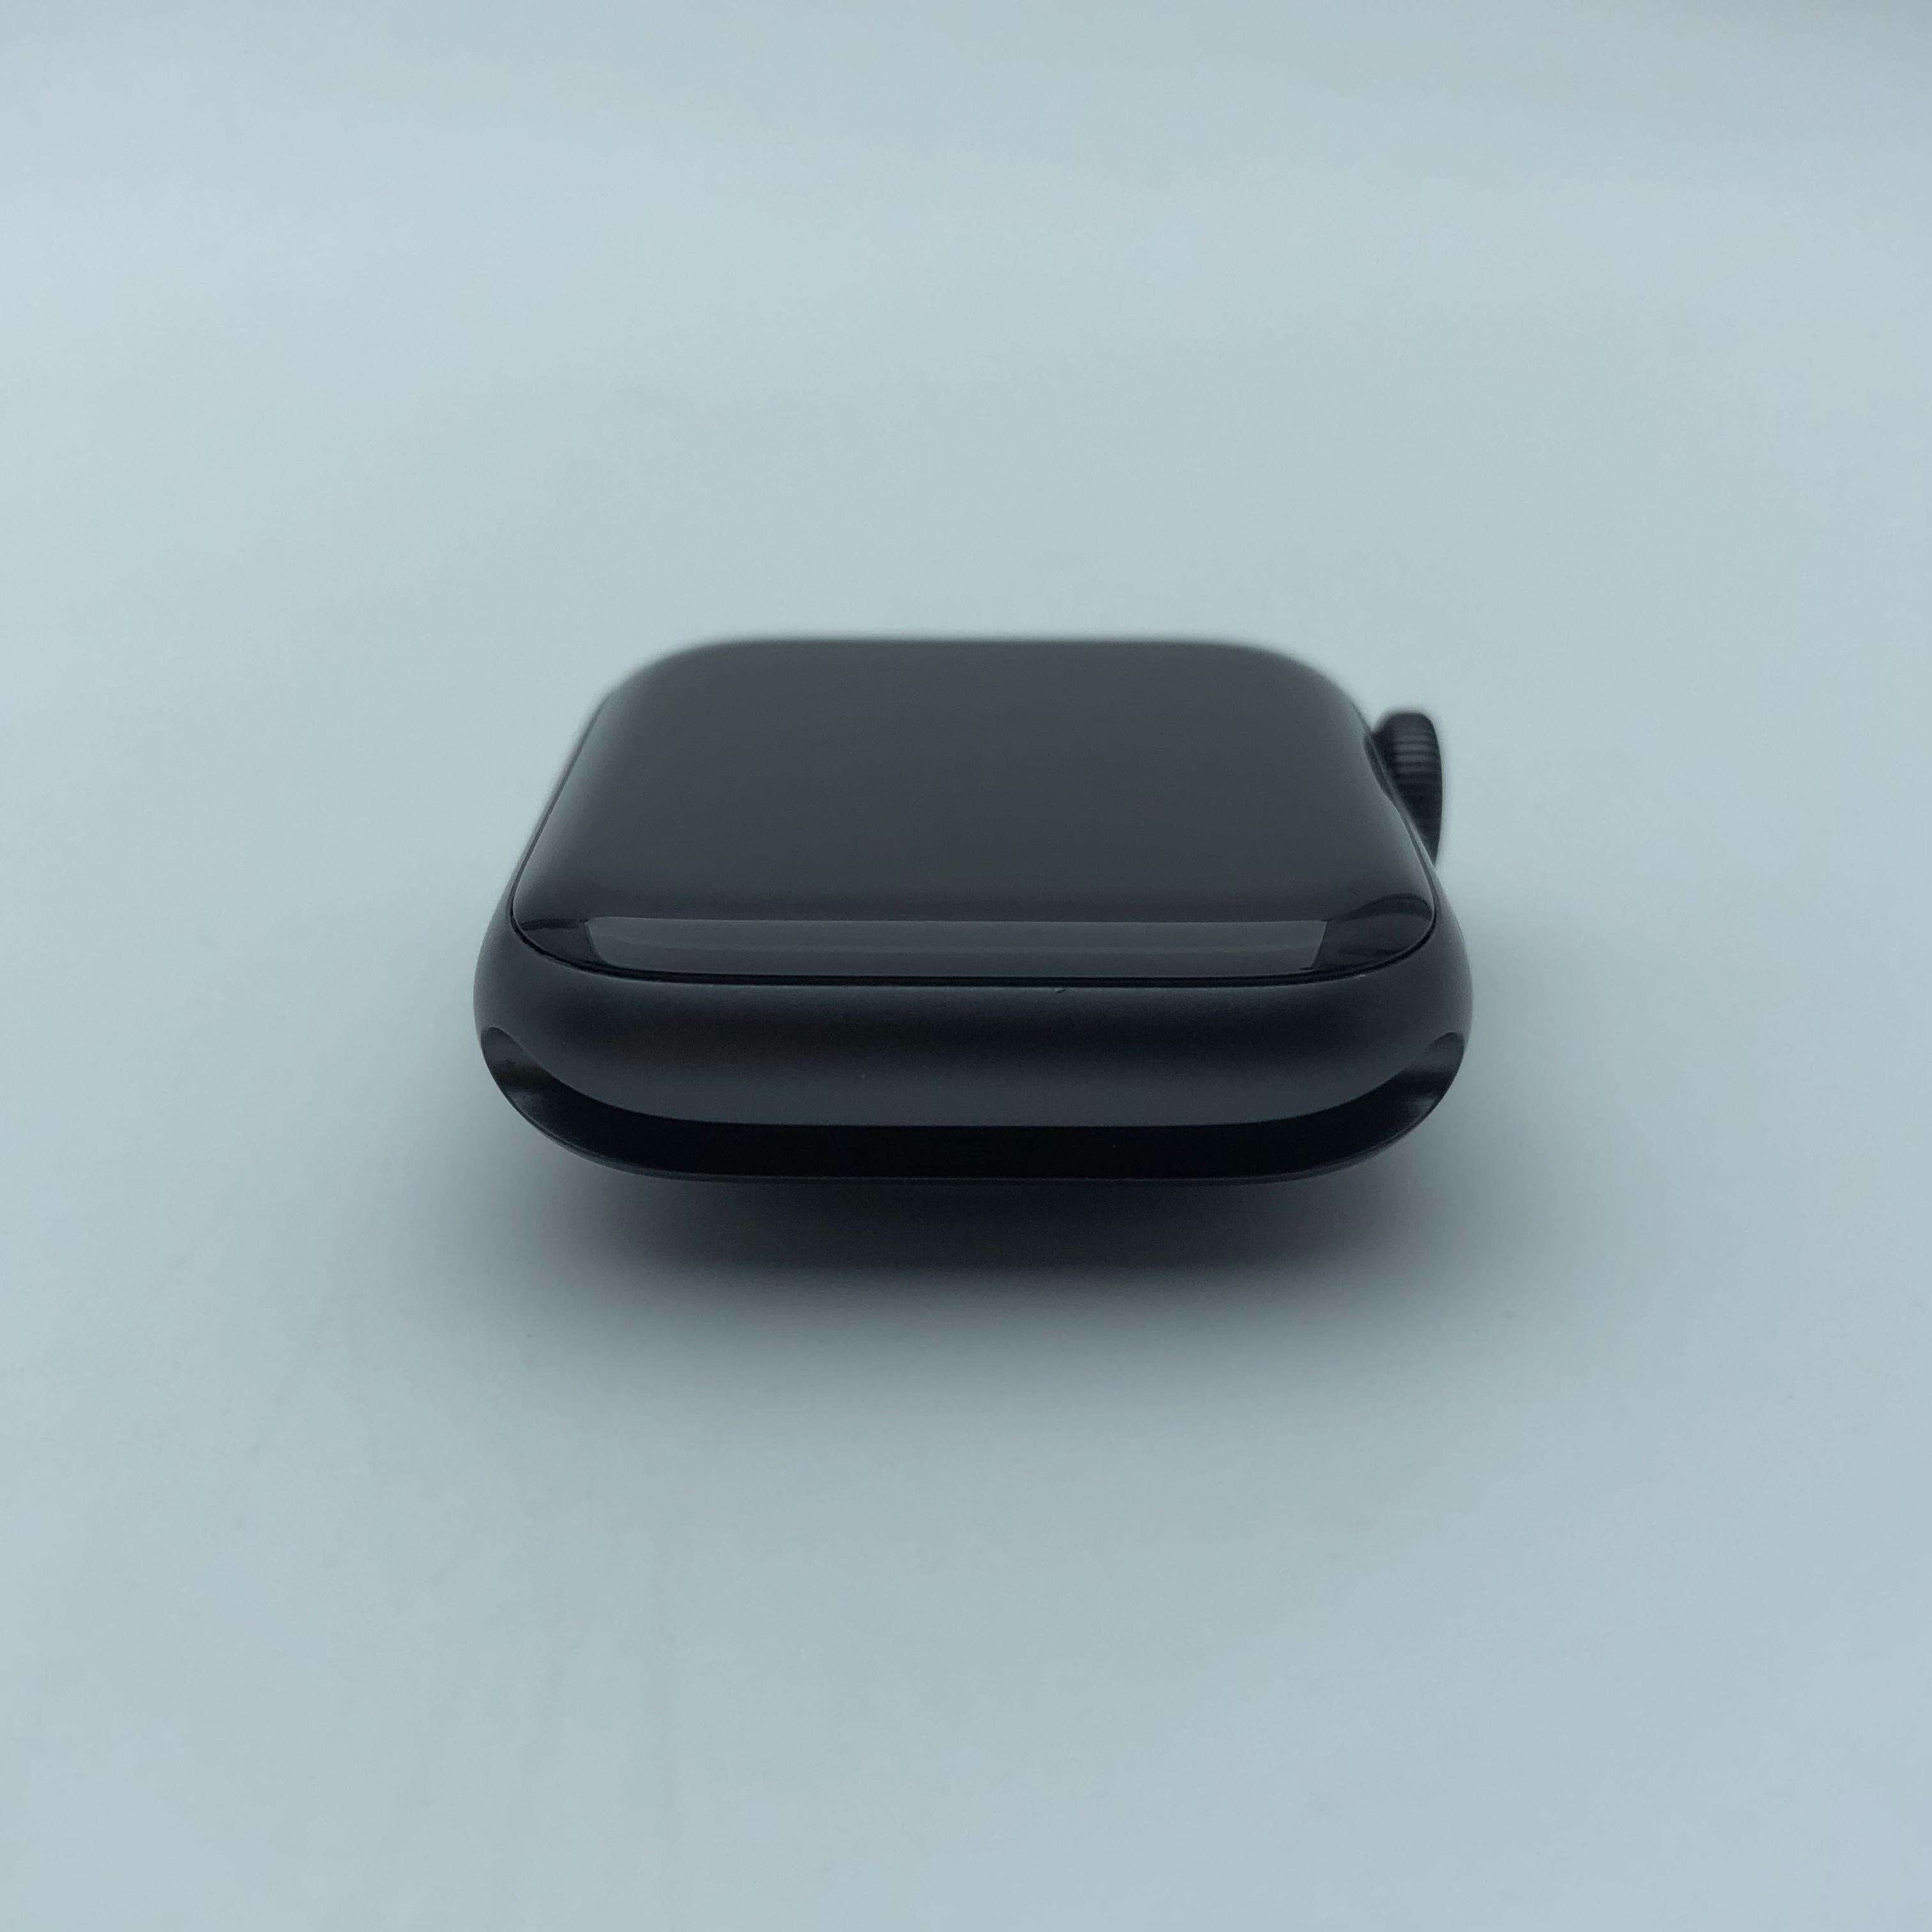 Apple Watch Series 4铝金属表壳 国行GPS版